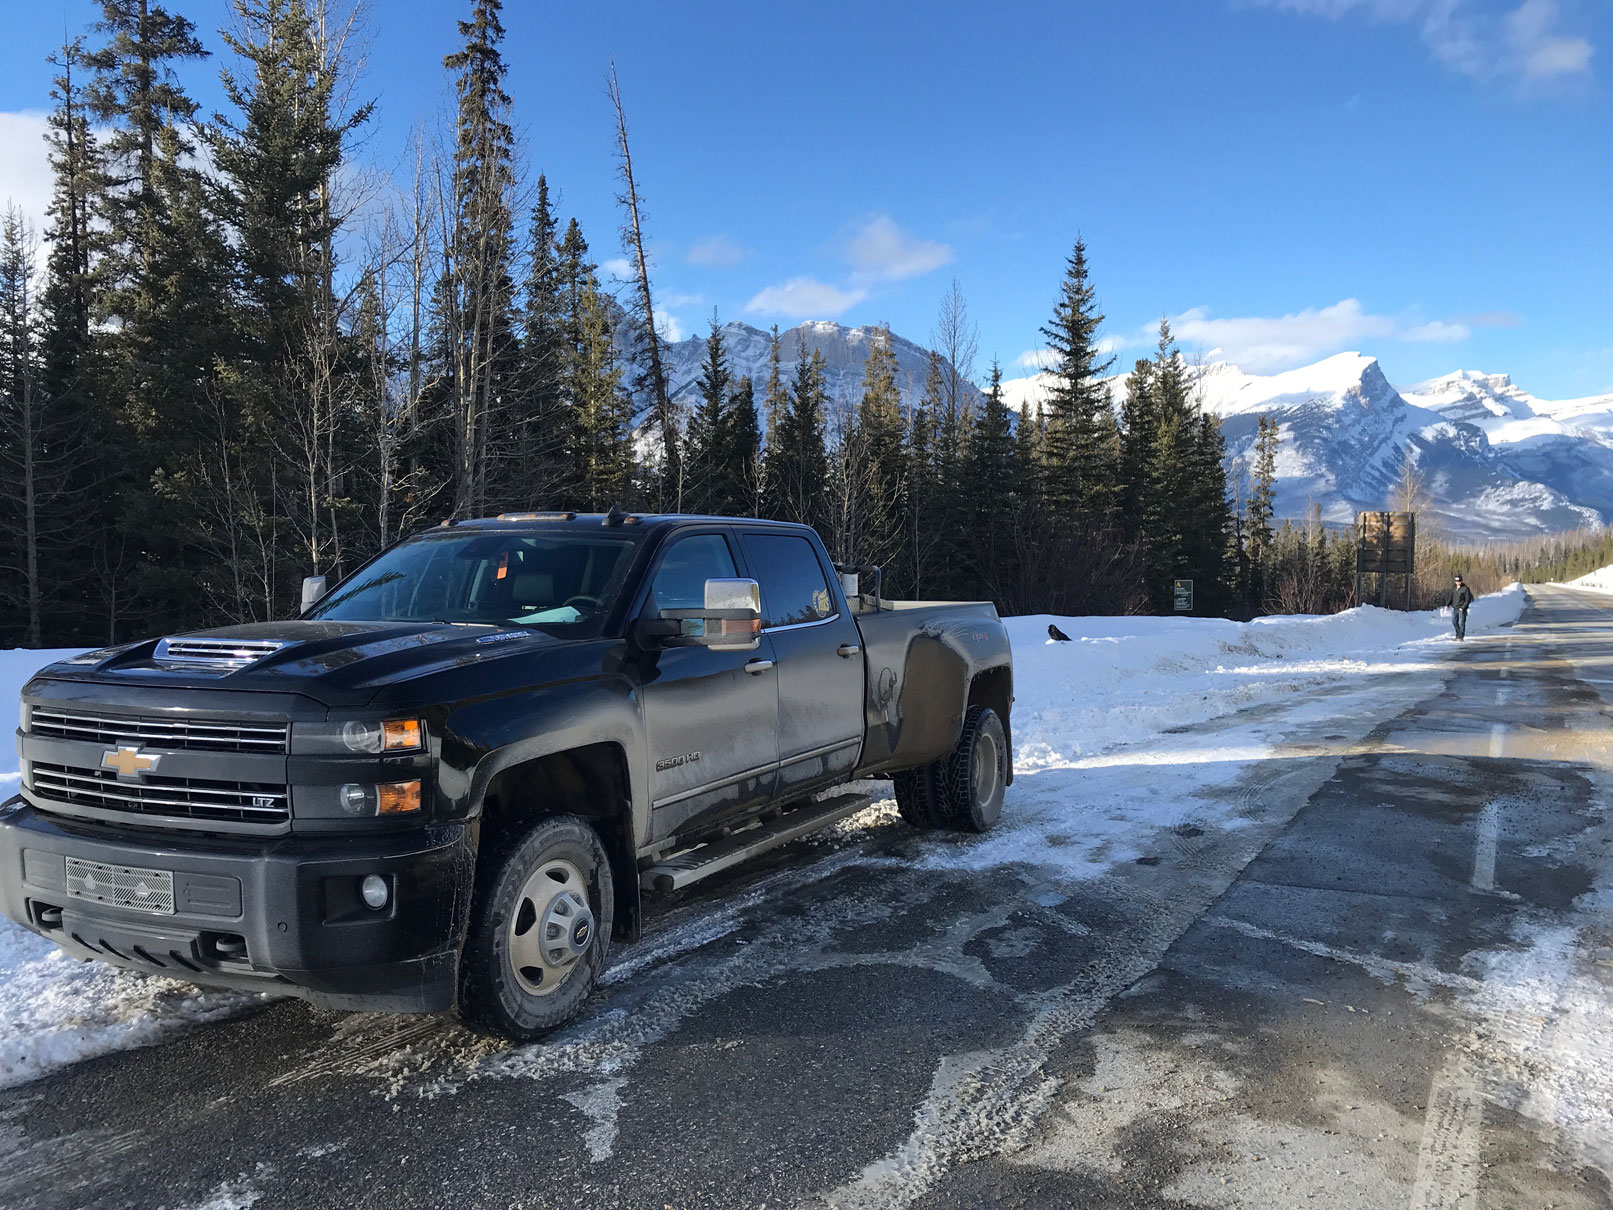 Rubydale Truck during asphalt paving job in Banff National Park near Mistaya Canyon